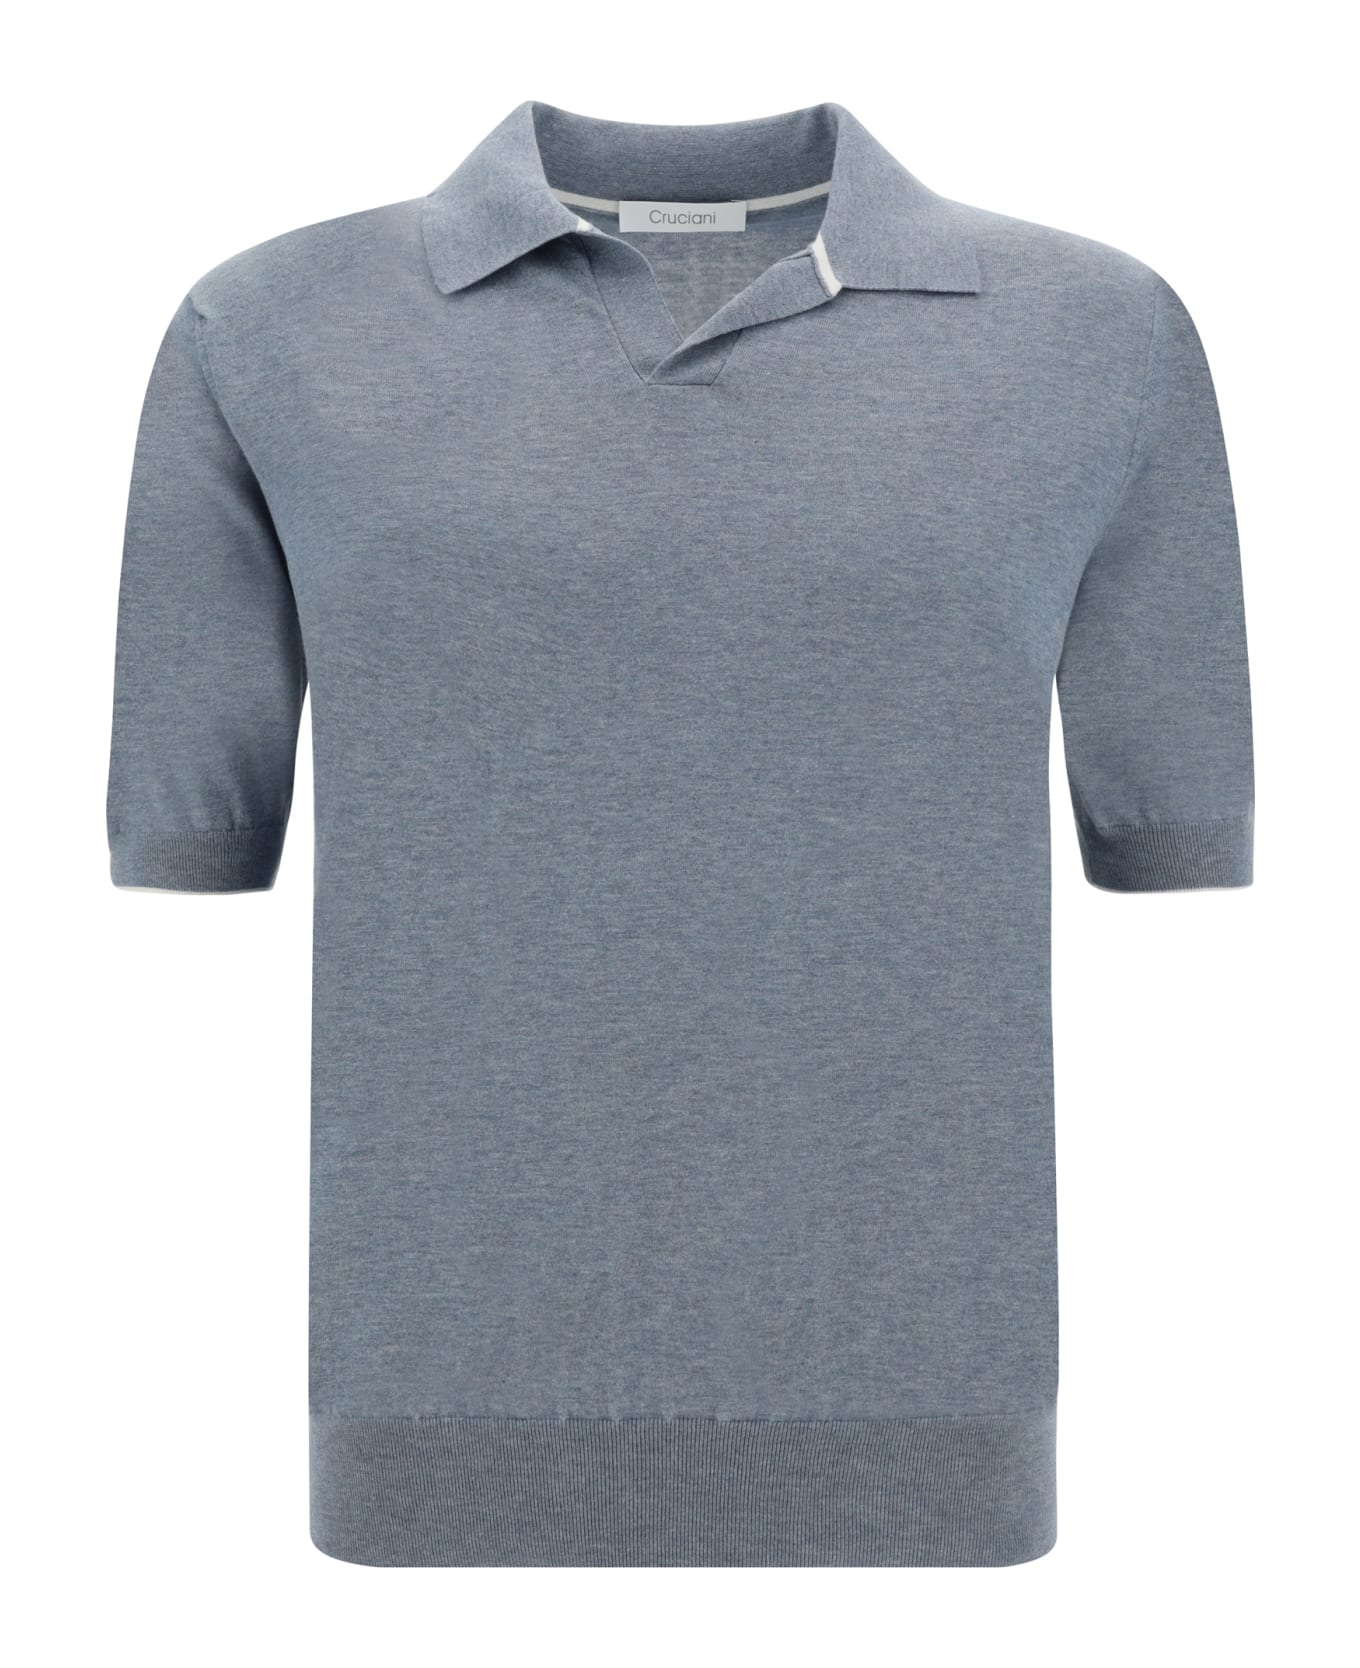 Cruciani Polo Shirt - 41e80012 ポロシャツ